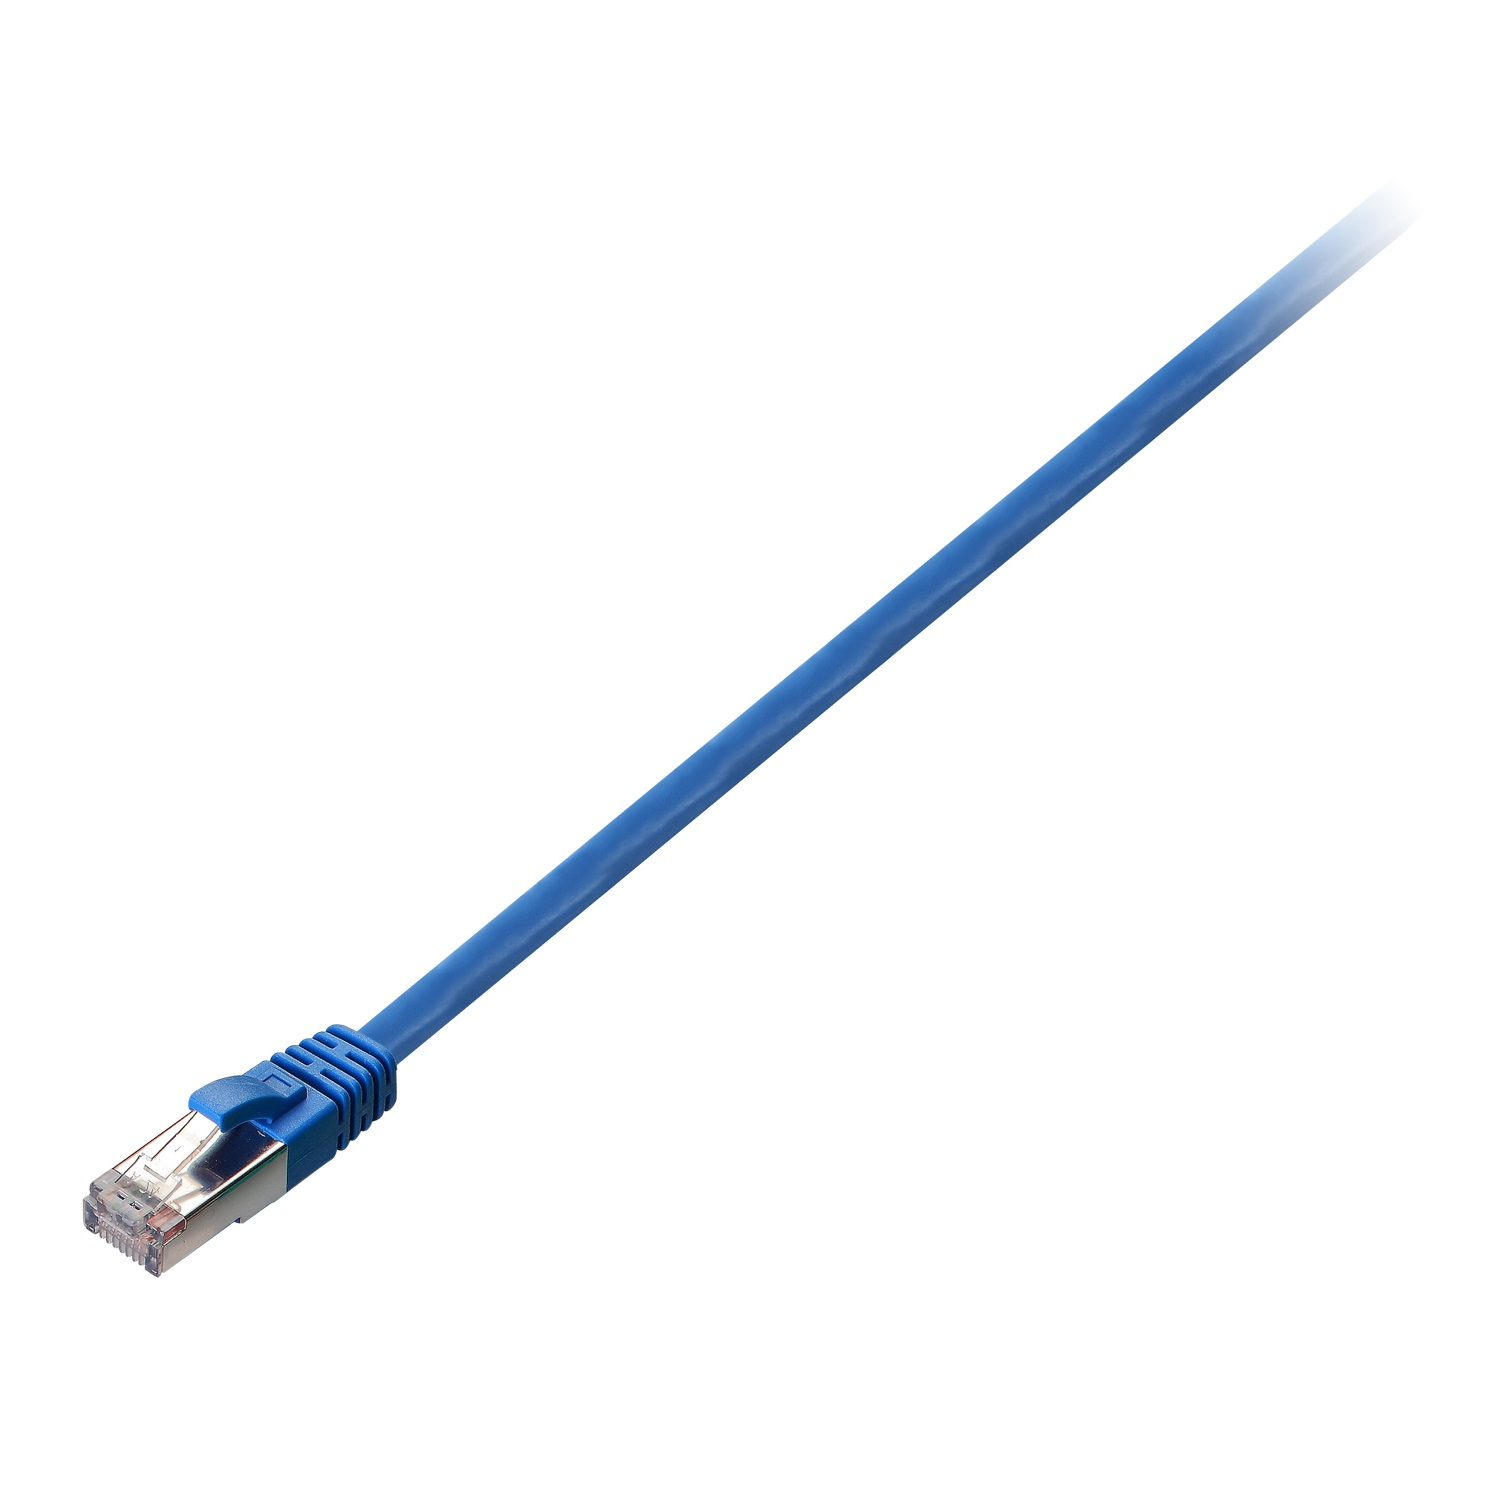 Photos - Cable (video, audio, USB) V7 CAT6 Ethernet Shielded STP 10M Blue V7CAT6STP-10M-BLU-1E 